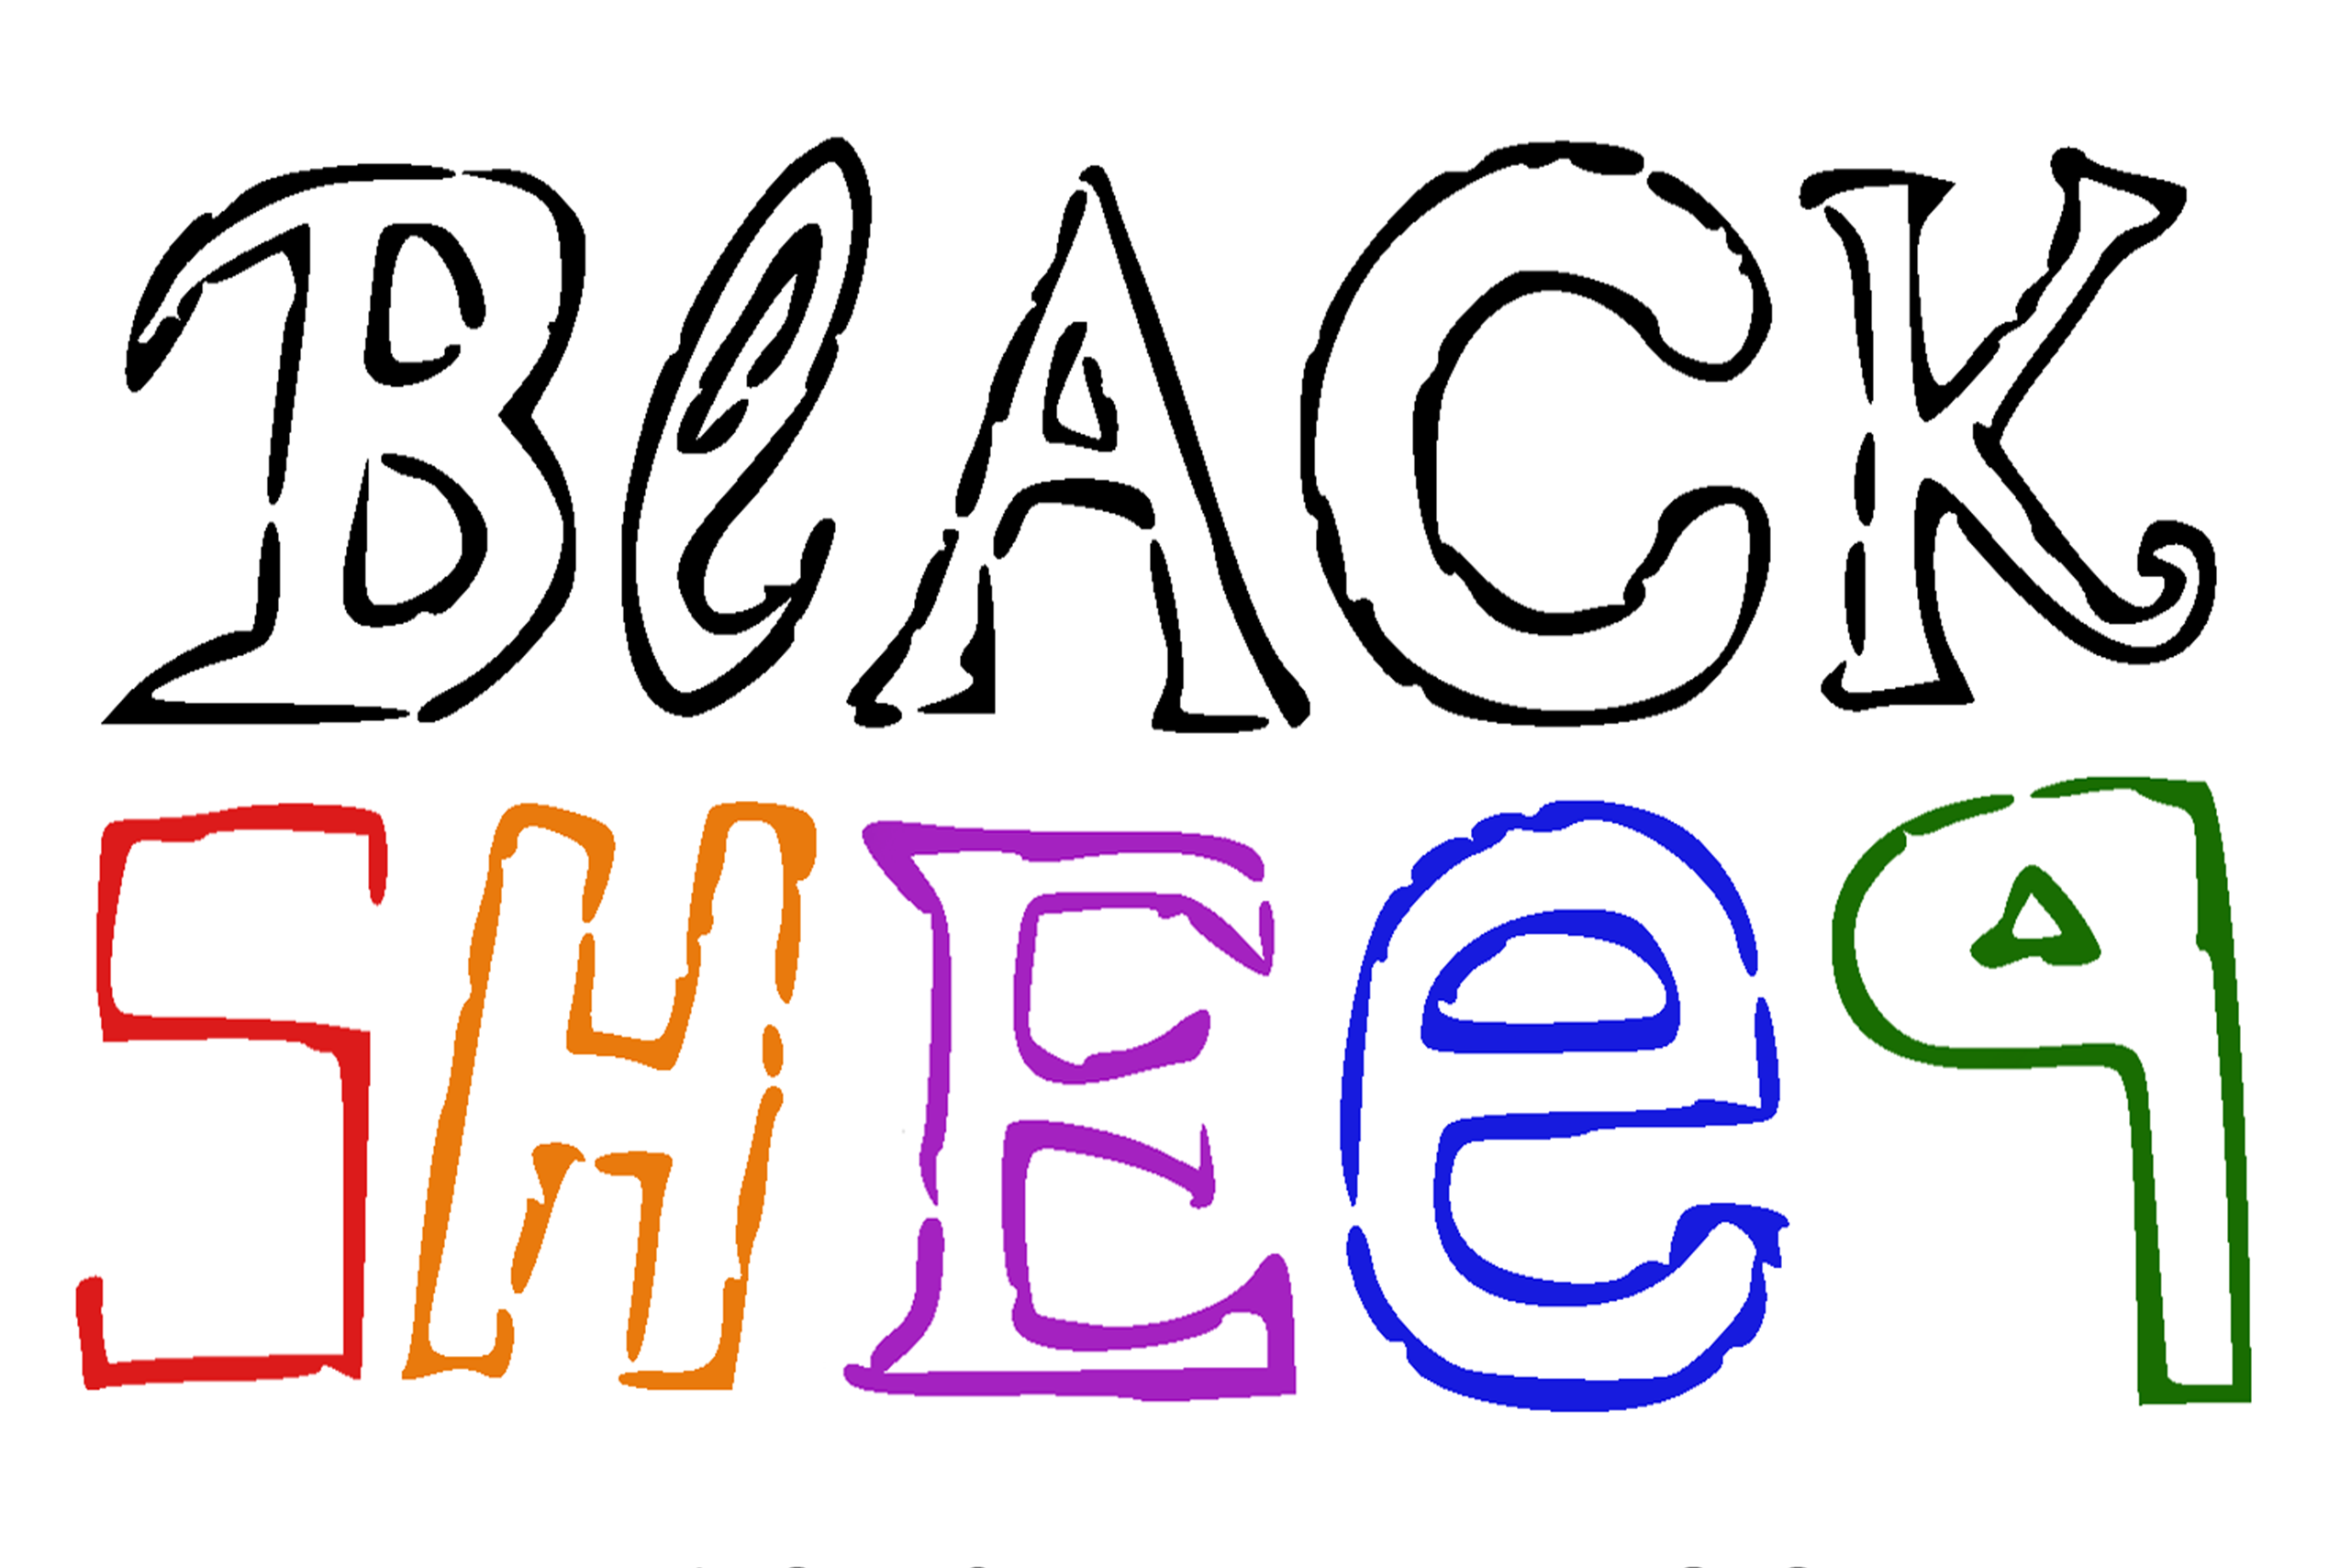 BlackSheep.blog